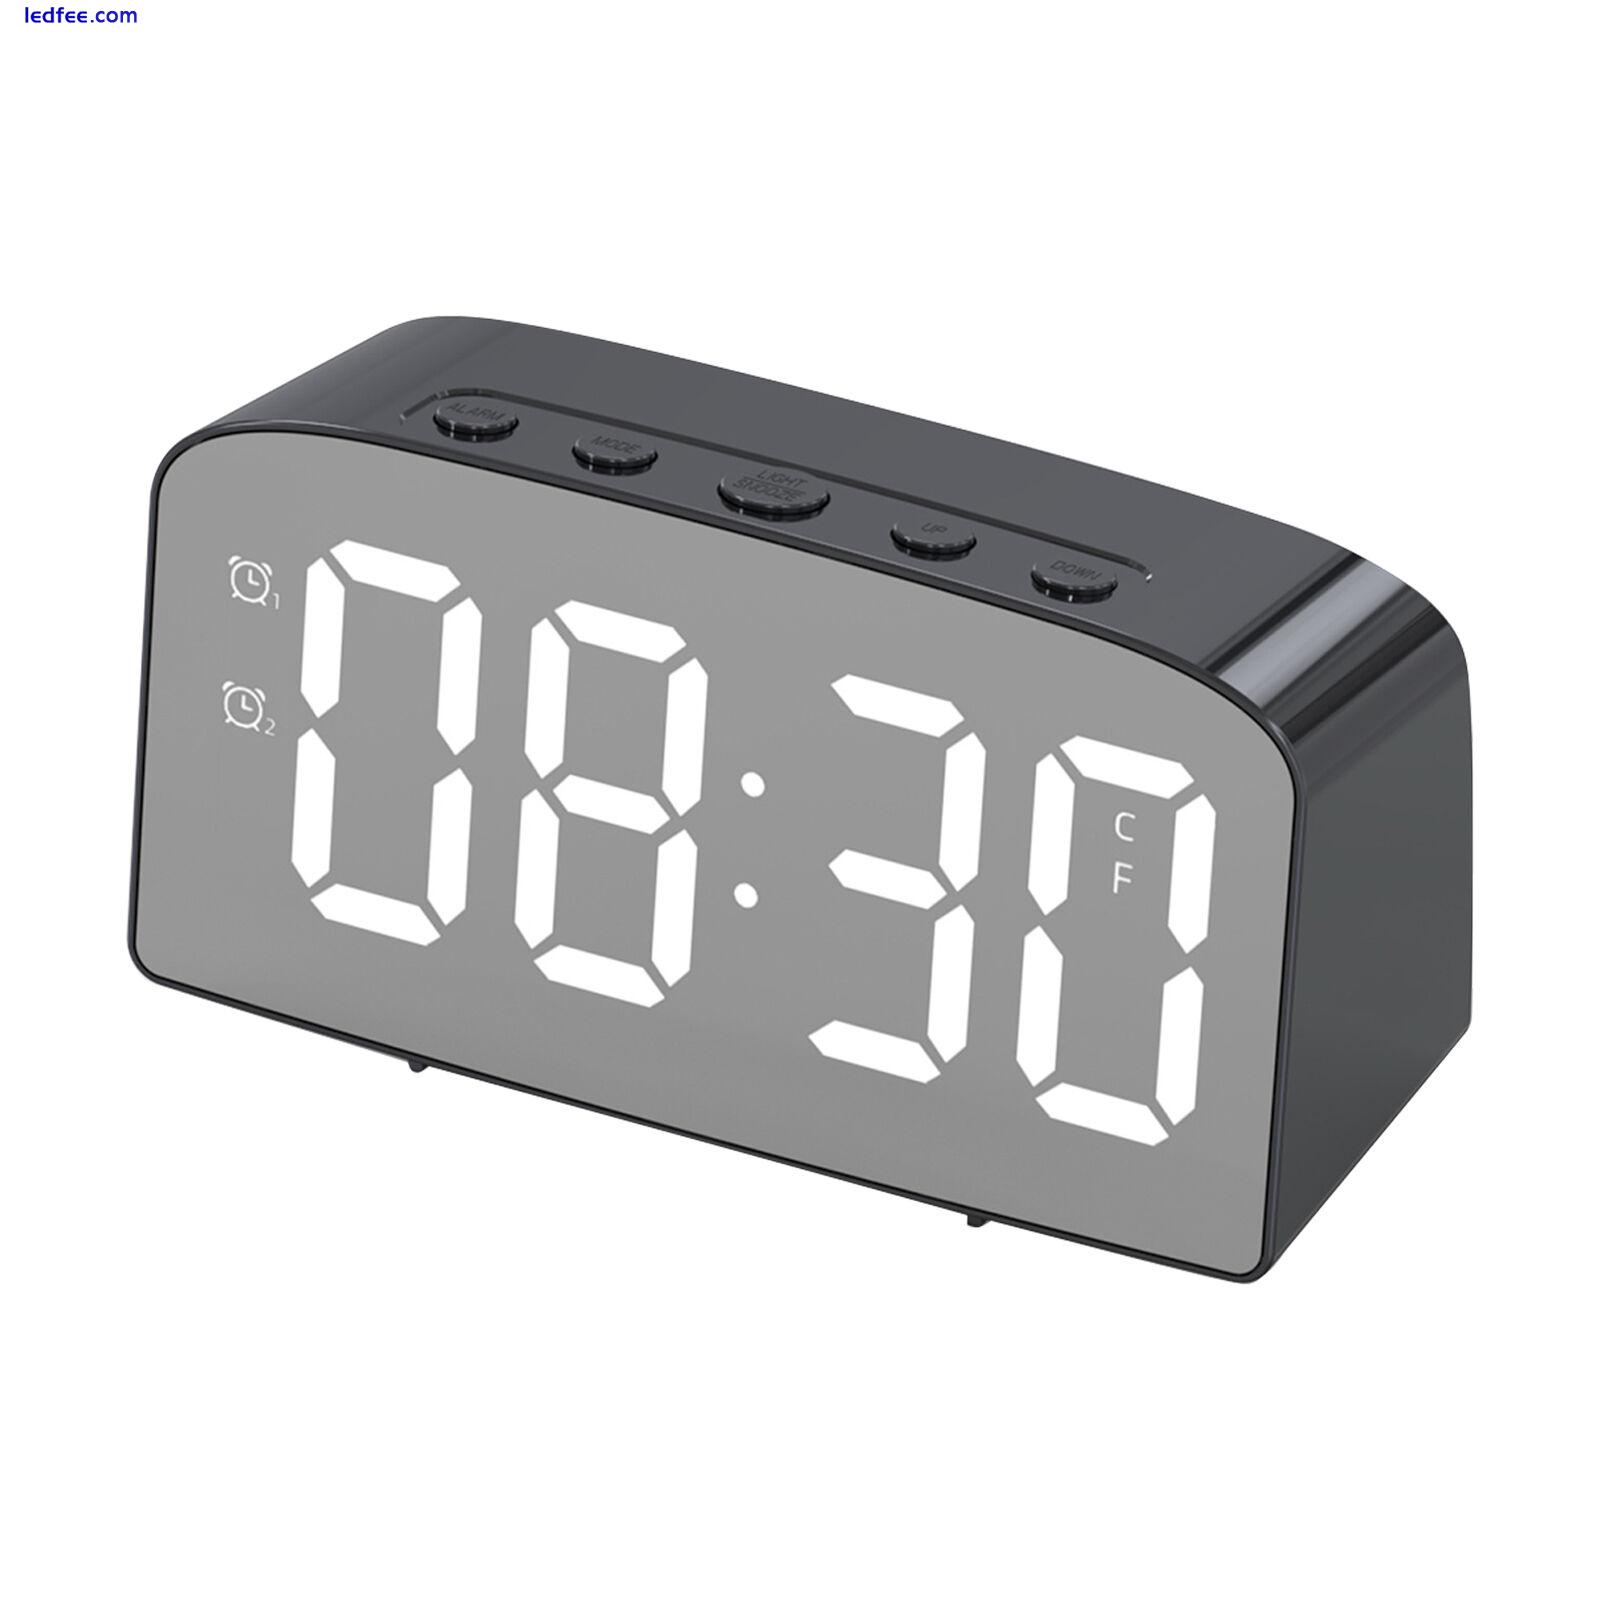 Large Display Snooze Digital Alarm Clock LED Mirror Table For Bedroom Decorative 1 